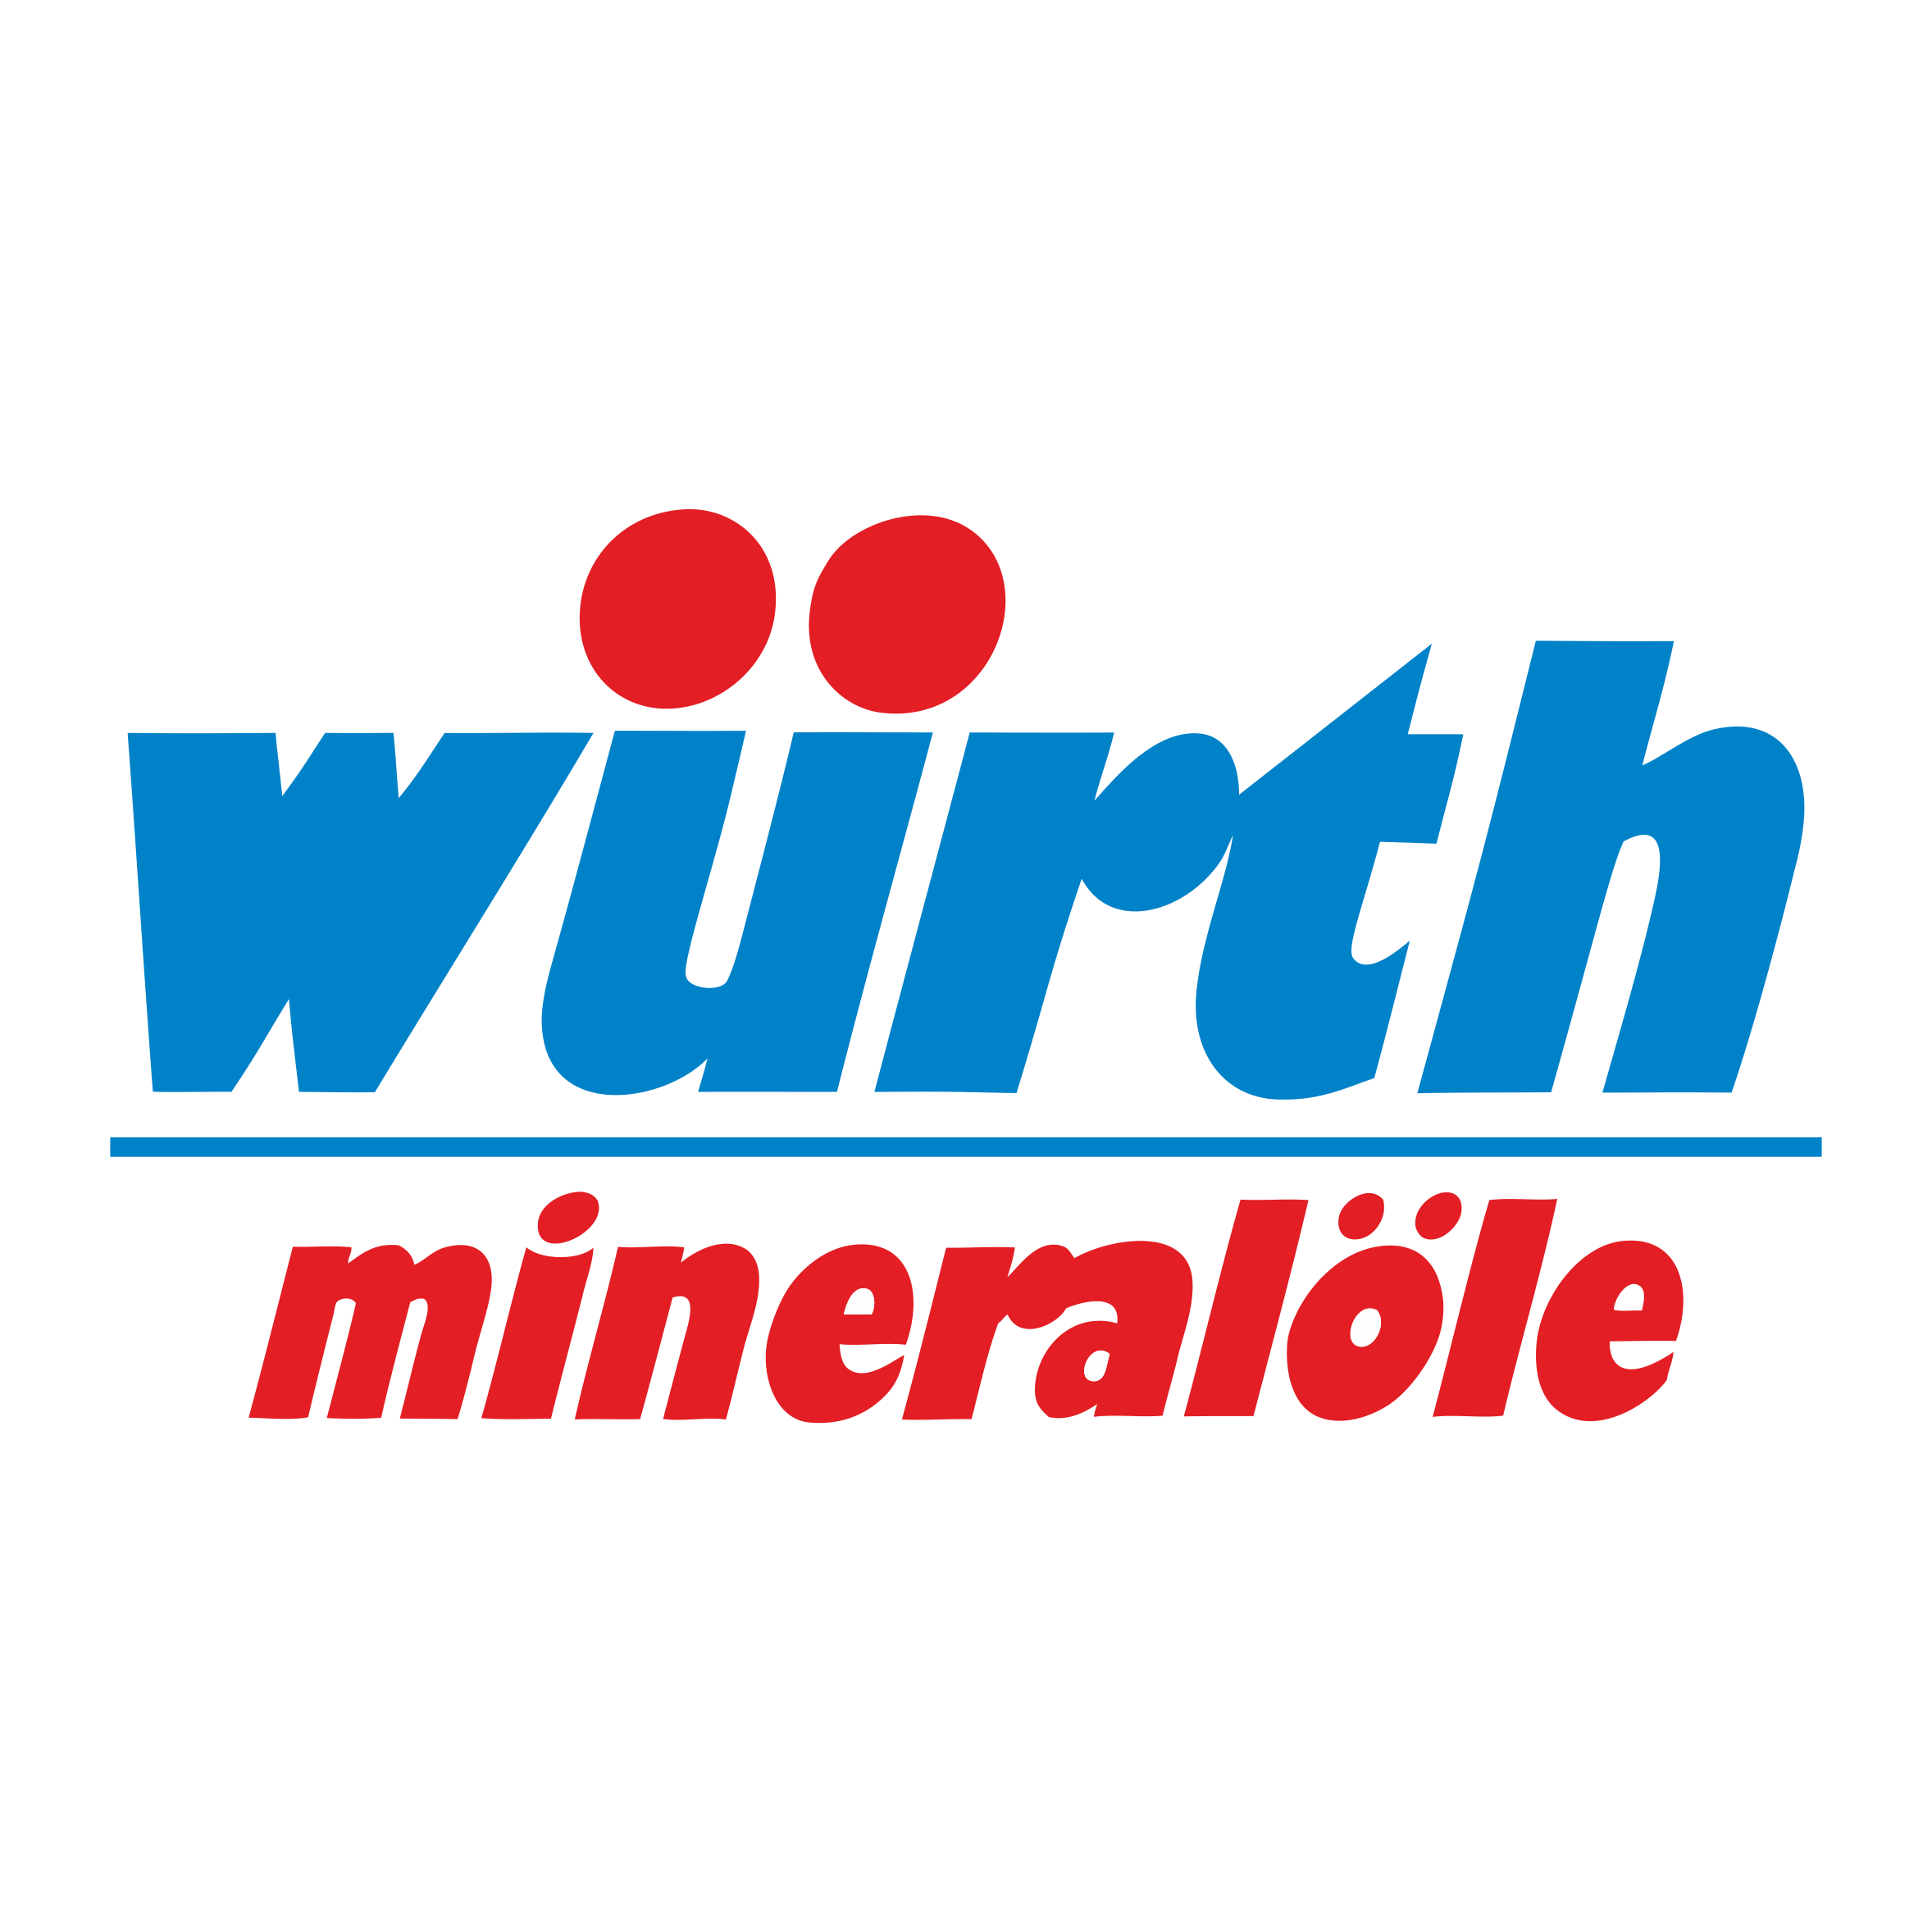 (c) Wuerth-mineraloele.de